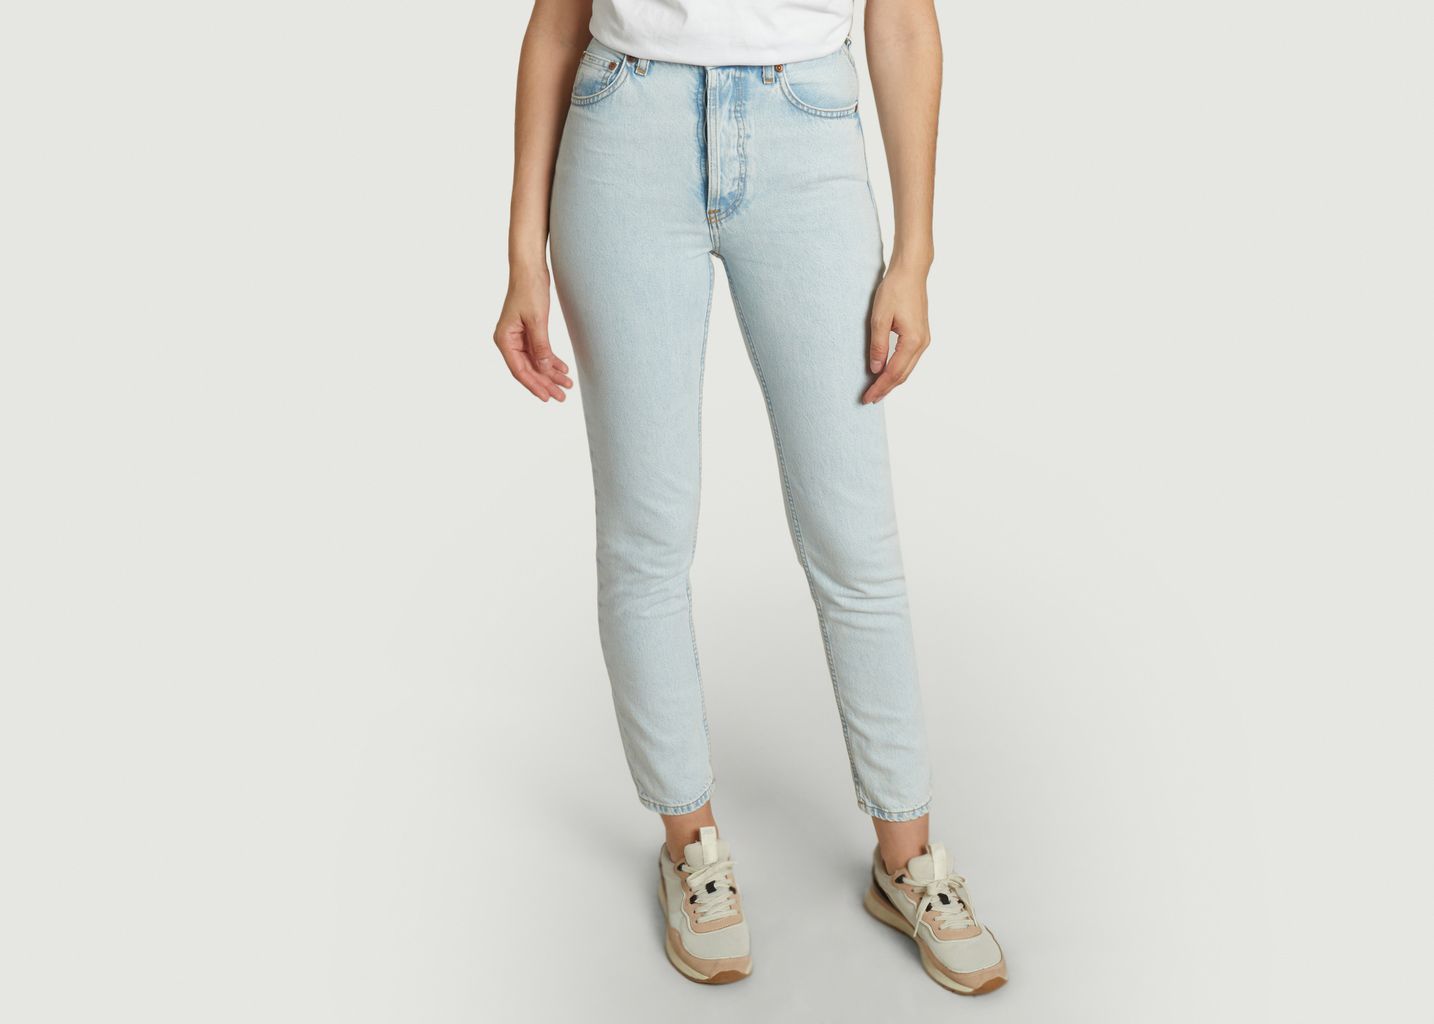 Breezy Britt jeans - Nudie Jeans